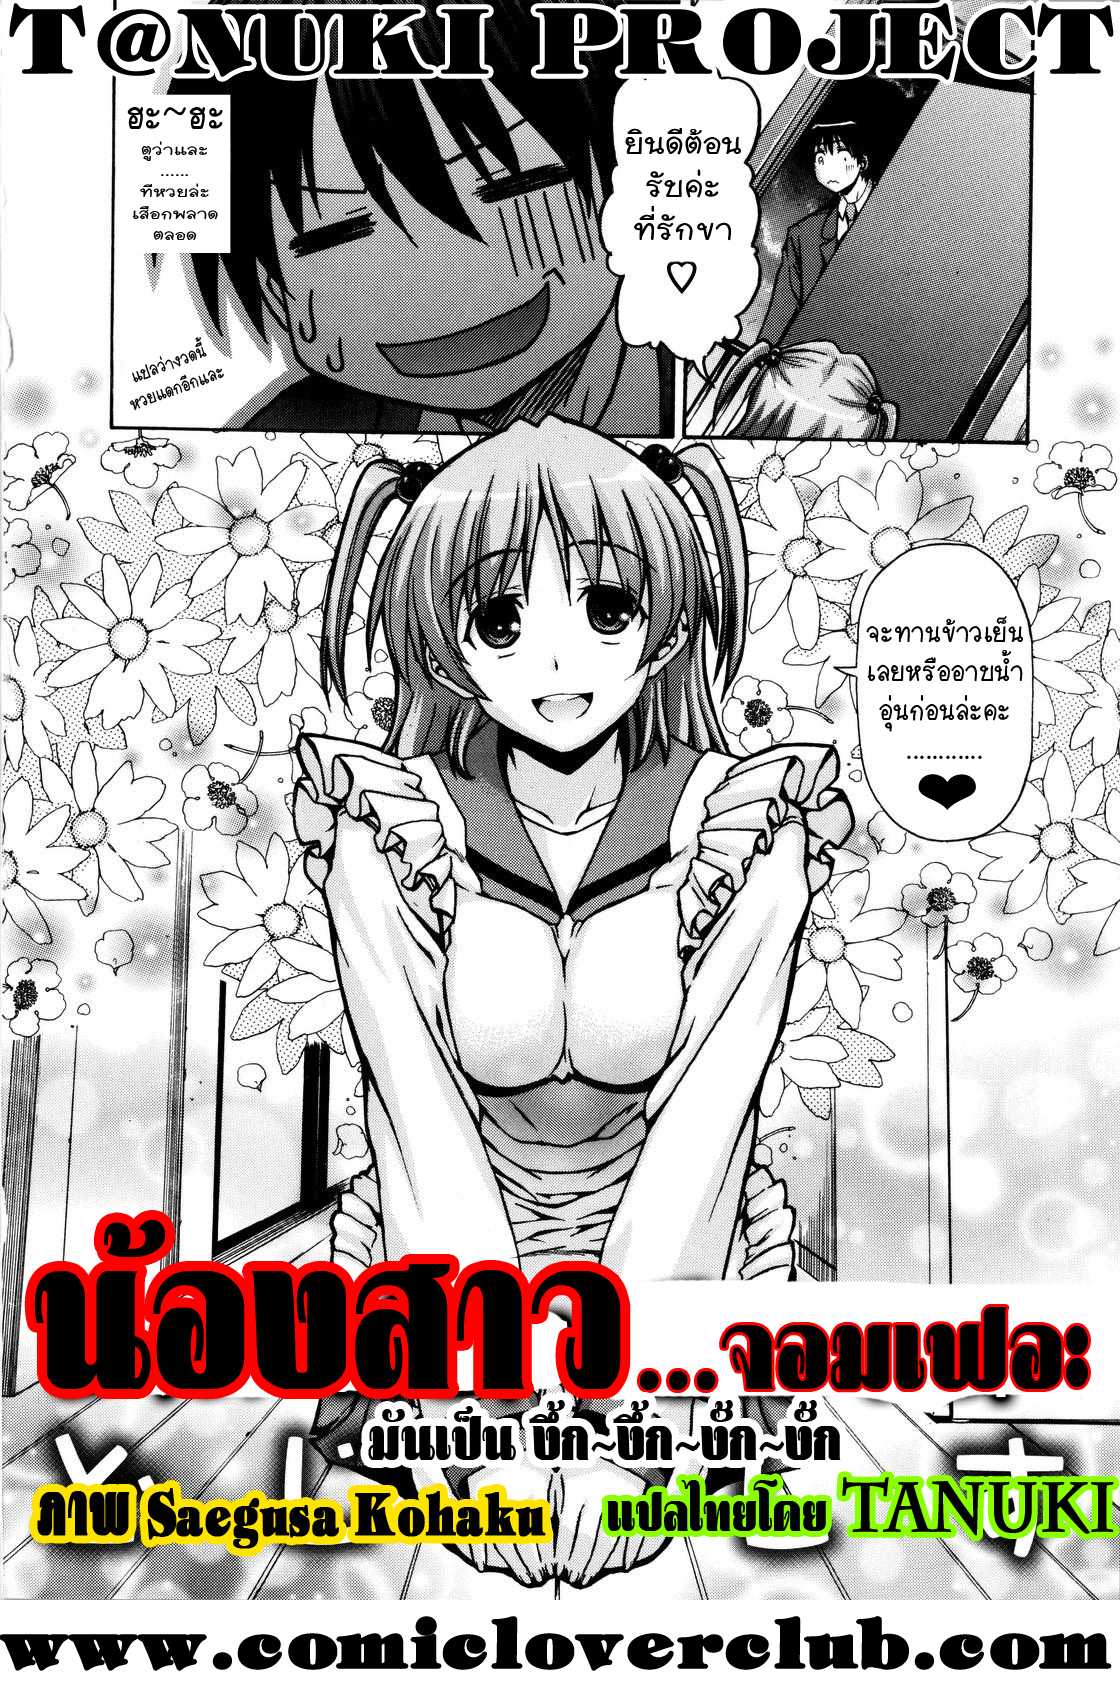 [Saegusa Kohaku]  Blunder Sister โดย T@NUKI  ไทย[Thai] http://www.comicloverclub.net/